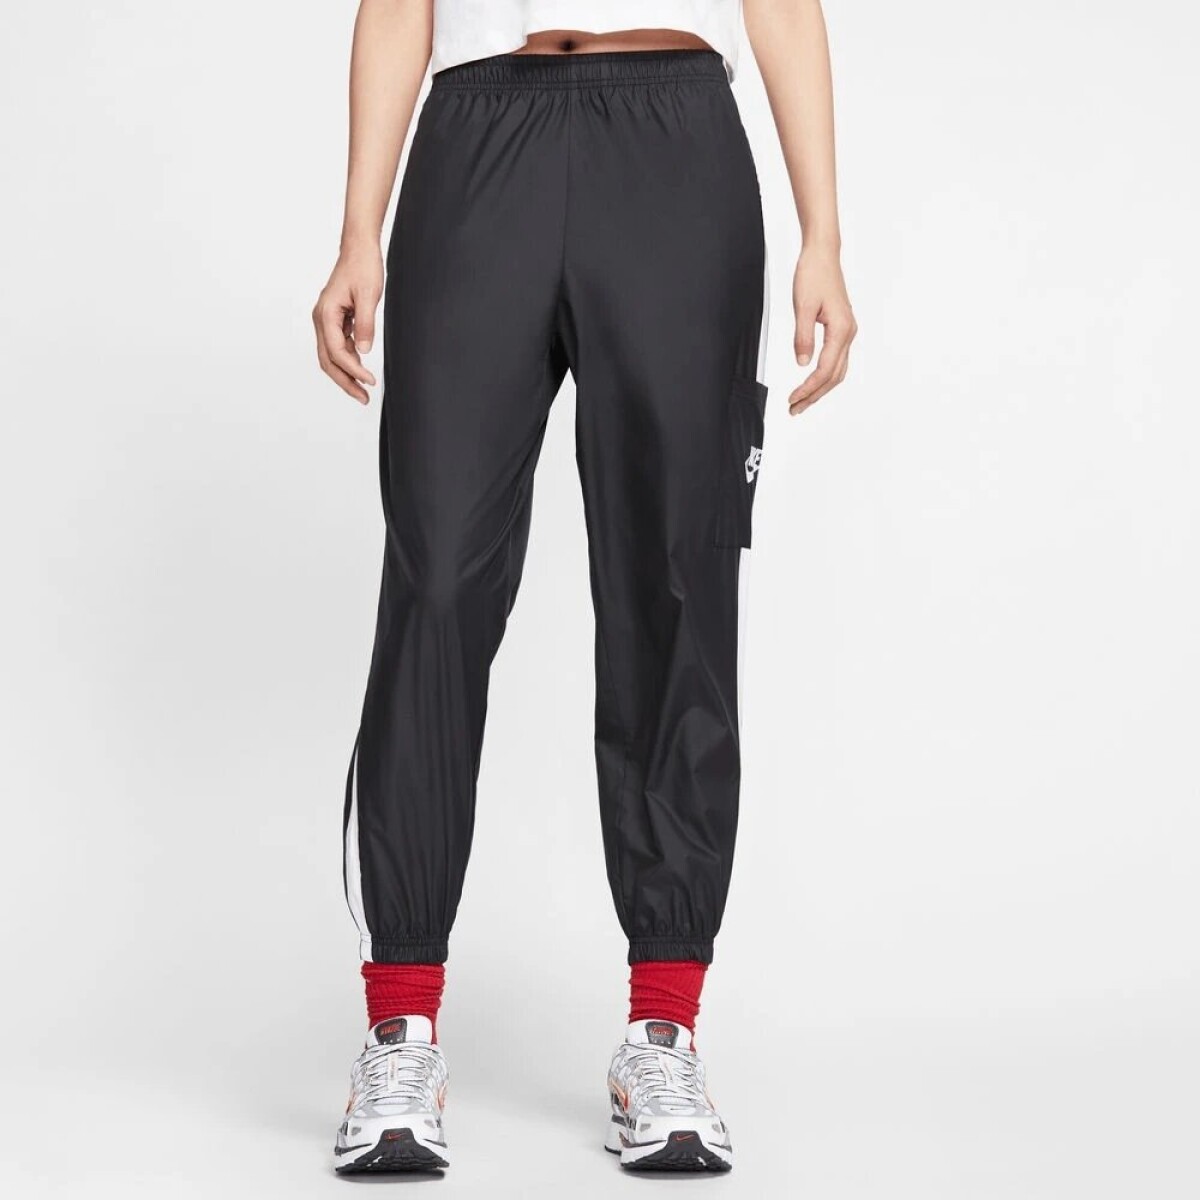 Pantalon Nike Moda Dama Wvn - Color Único 